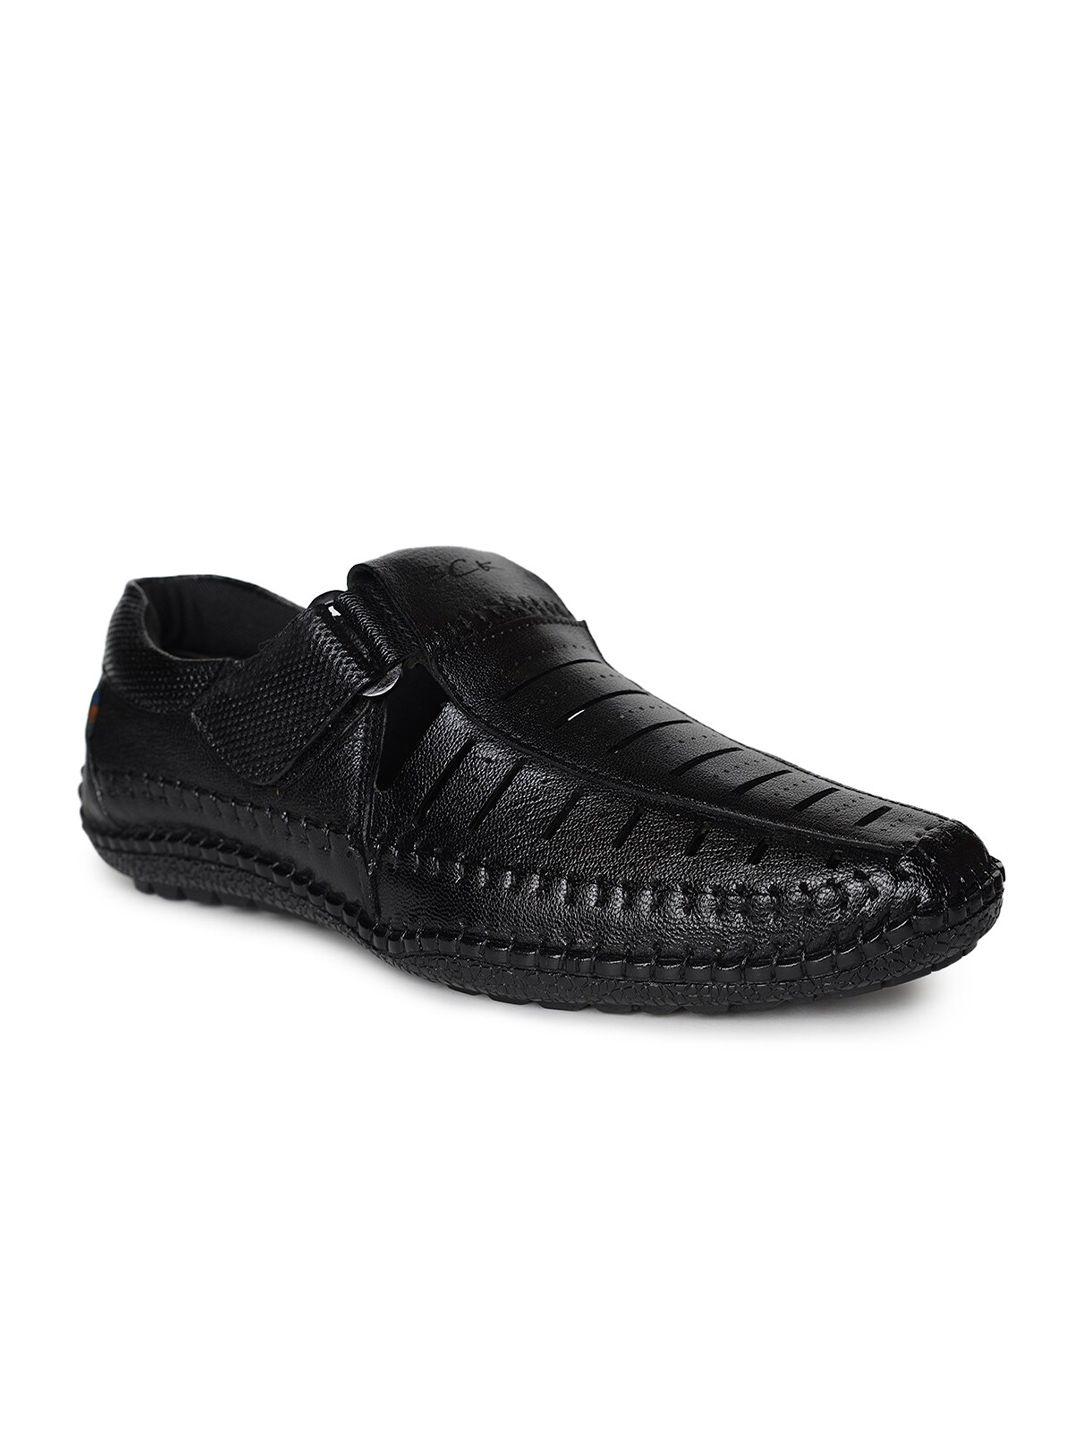 buckaroo-men-textured-leather-shoe-style-sandals-with-velcro